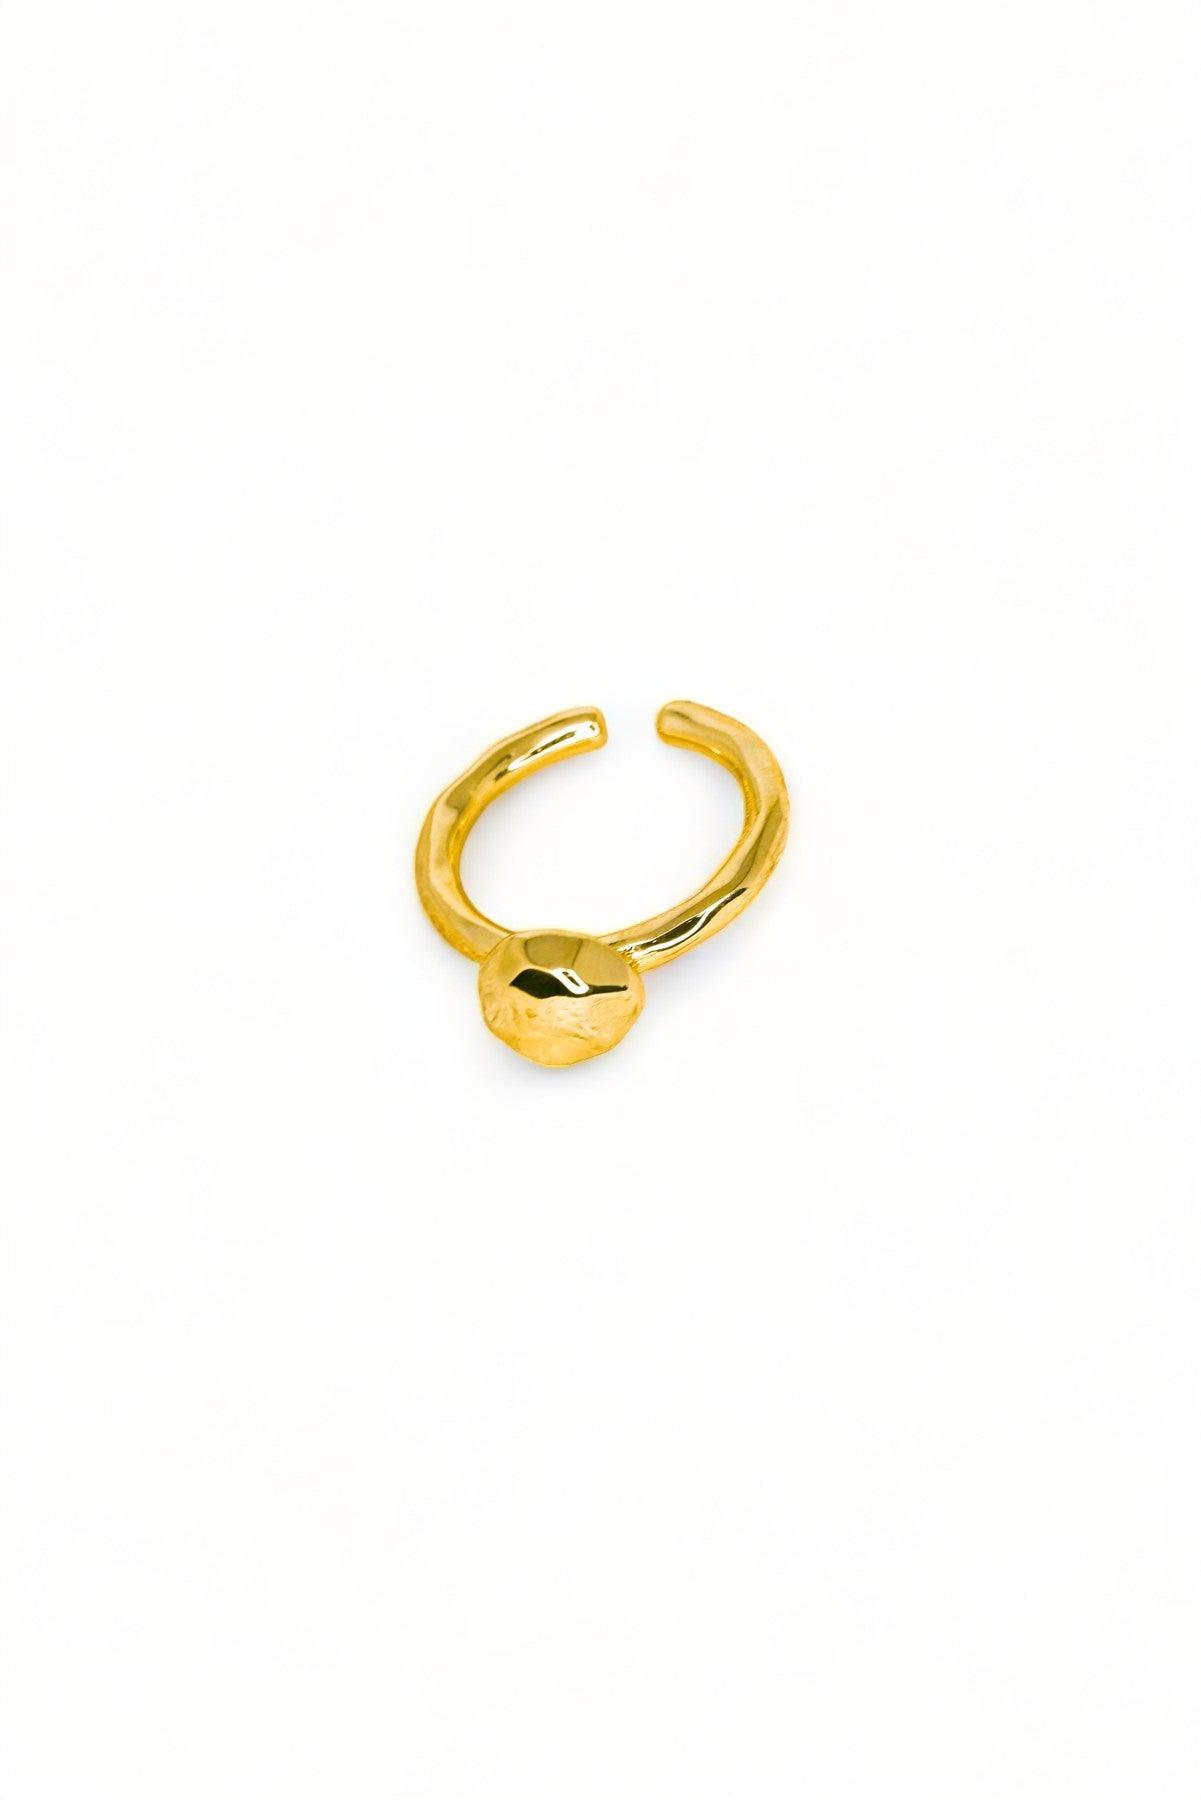 Ball Chunk Adjustable Gold Ring - Tasha Apparel Wholesale